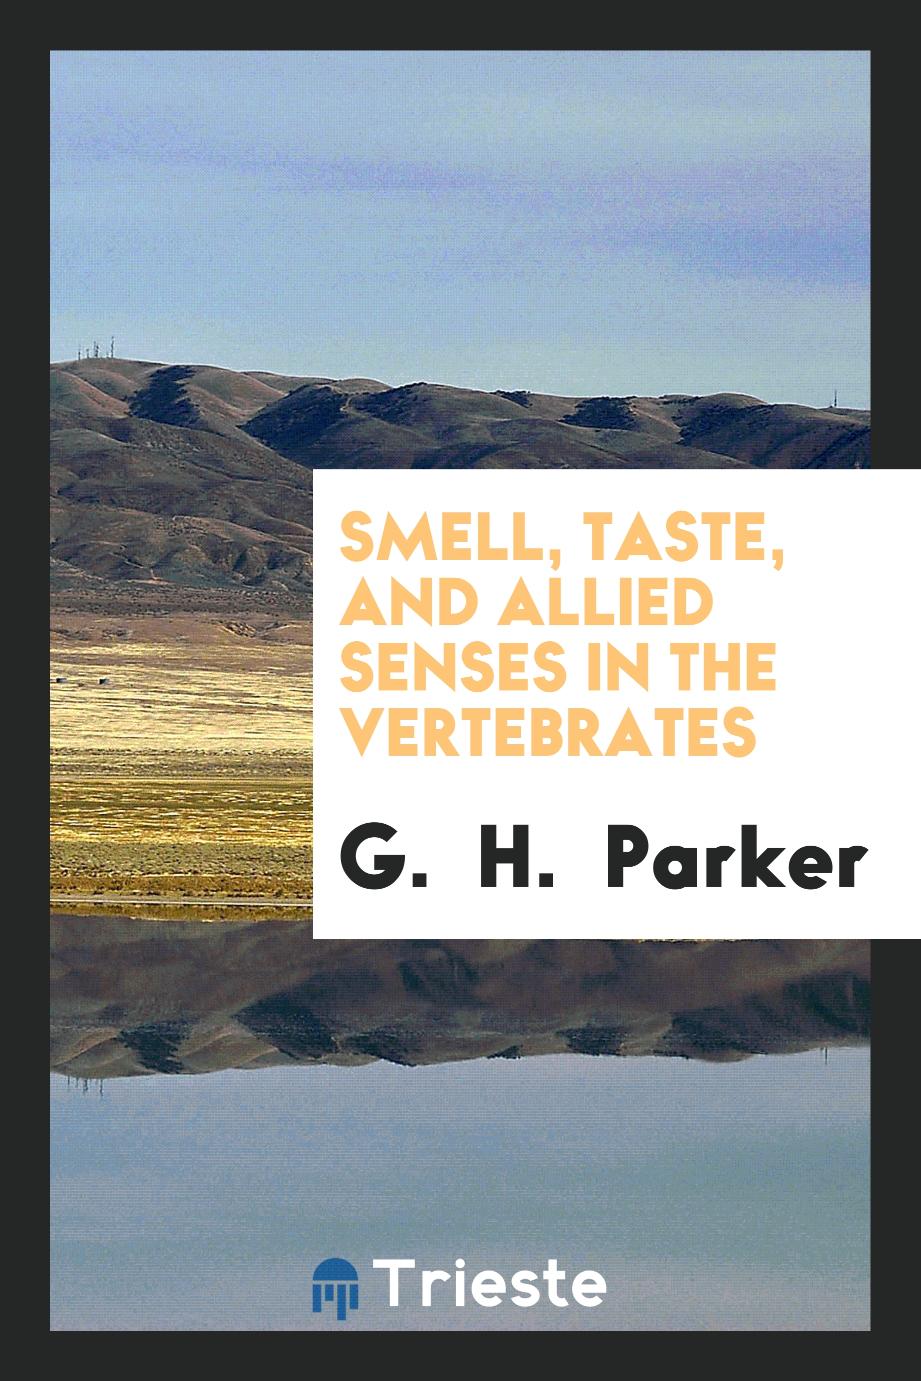 Smell, taste, and allied senses in the vertebrates